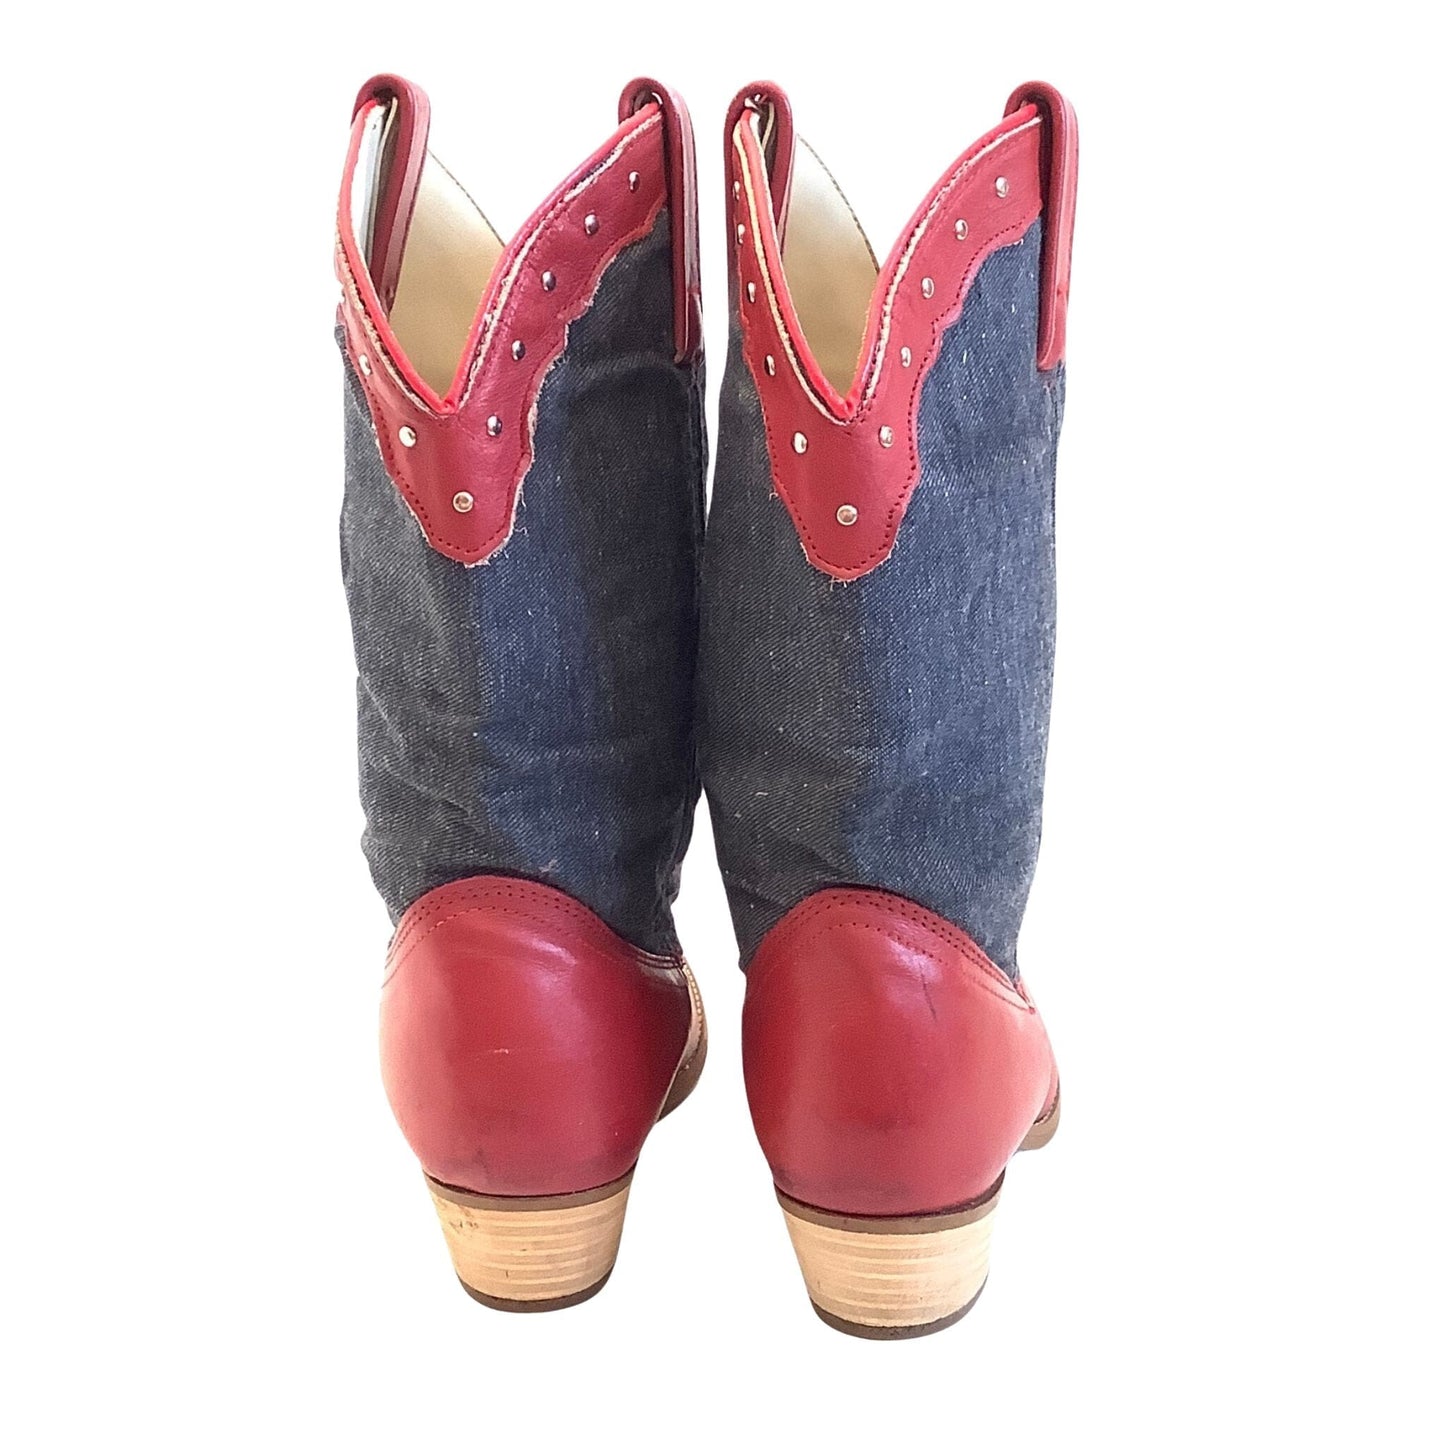 Dingo Western Boots 6.5 / Multi / Vintage 1970s